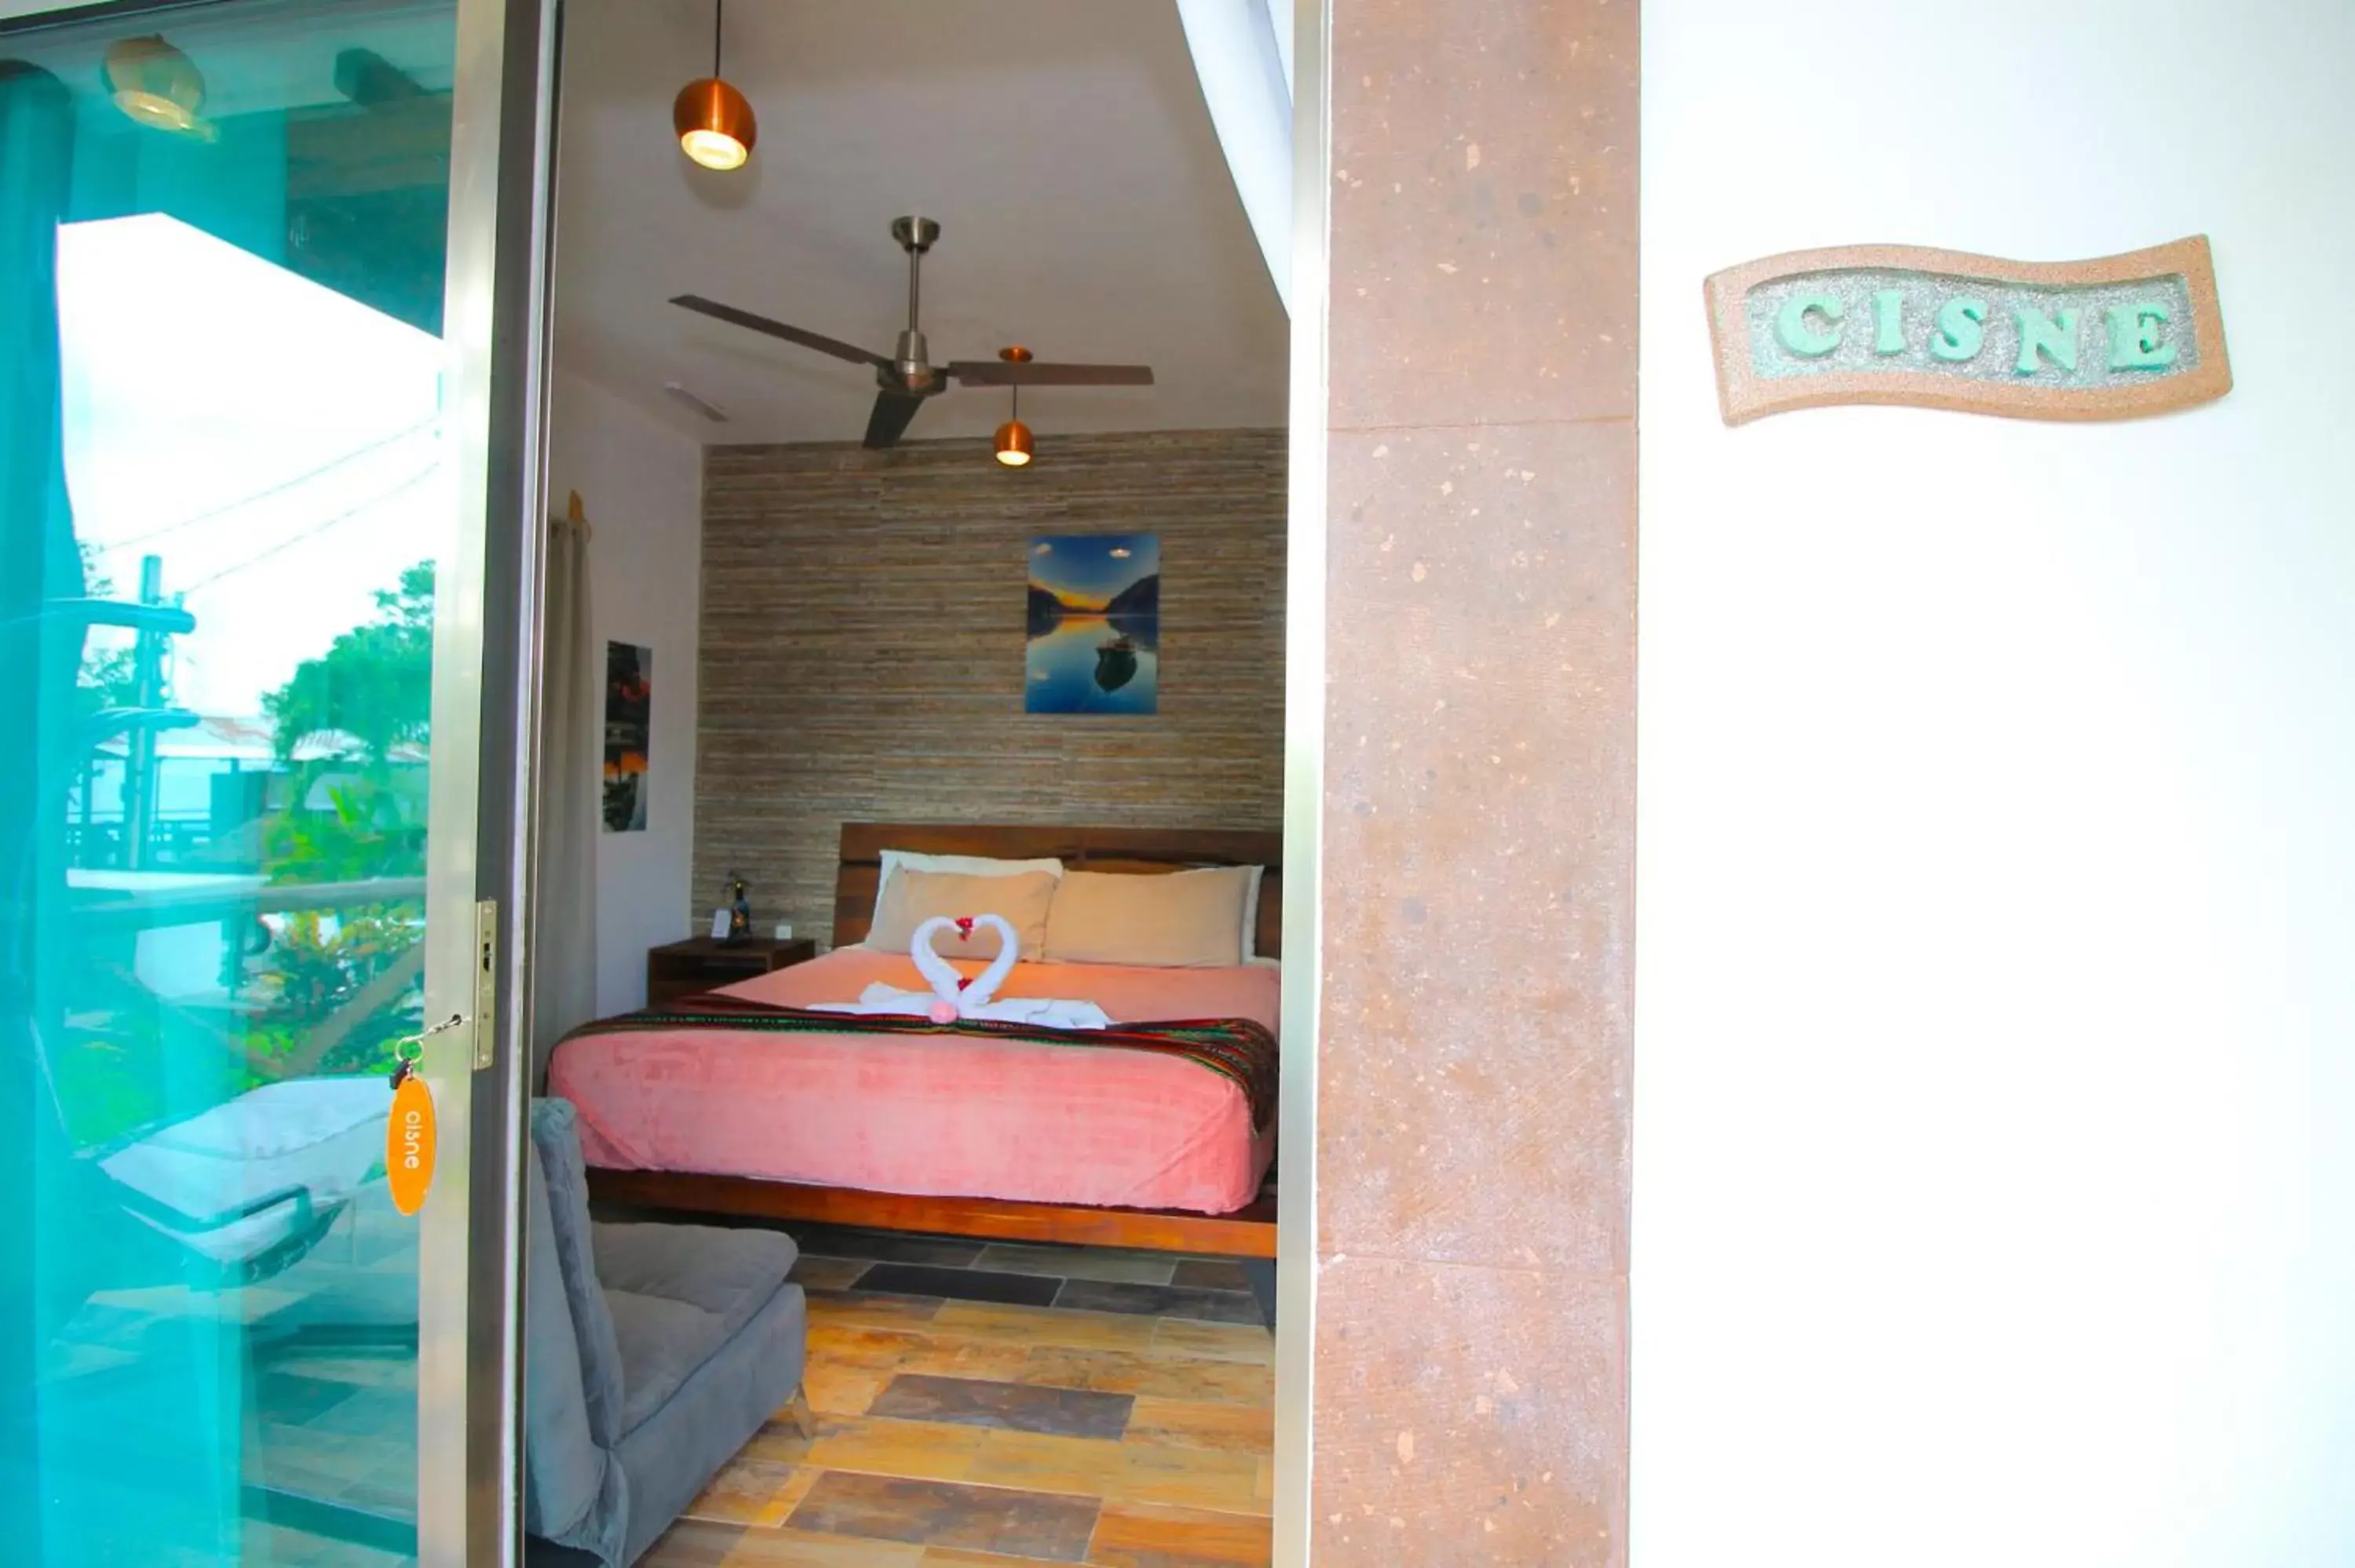 Photo of the whole room in Hotel Pancho Villas Bacalar Vista a Laguna